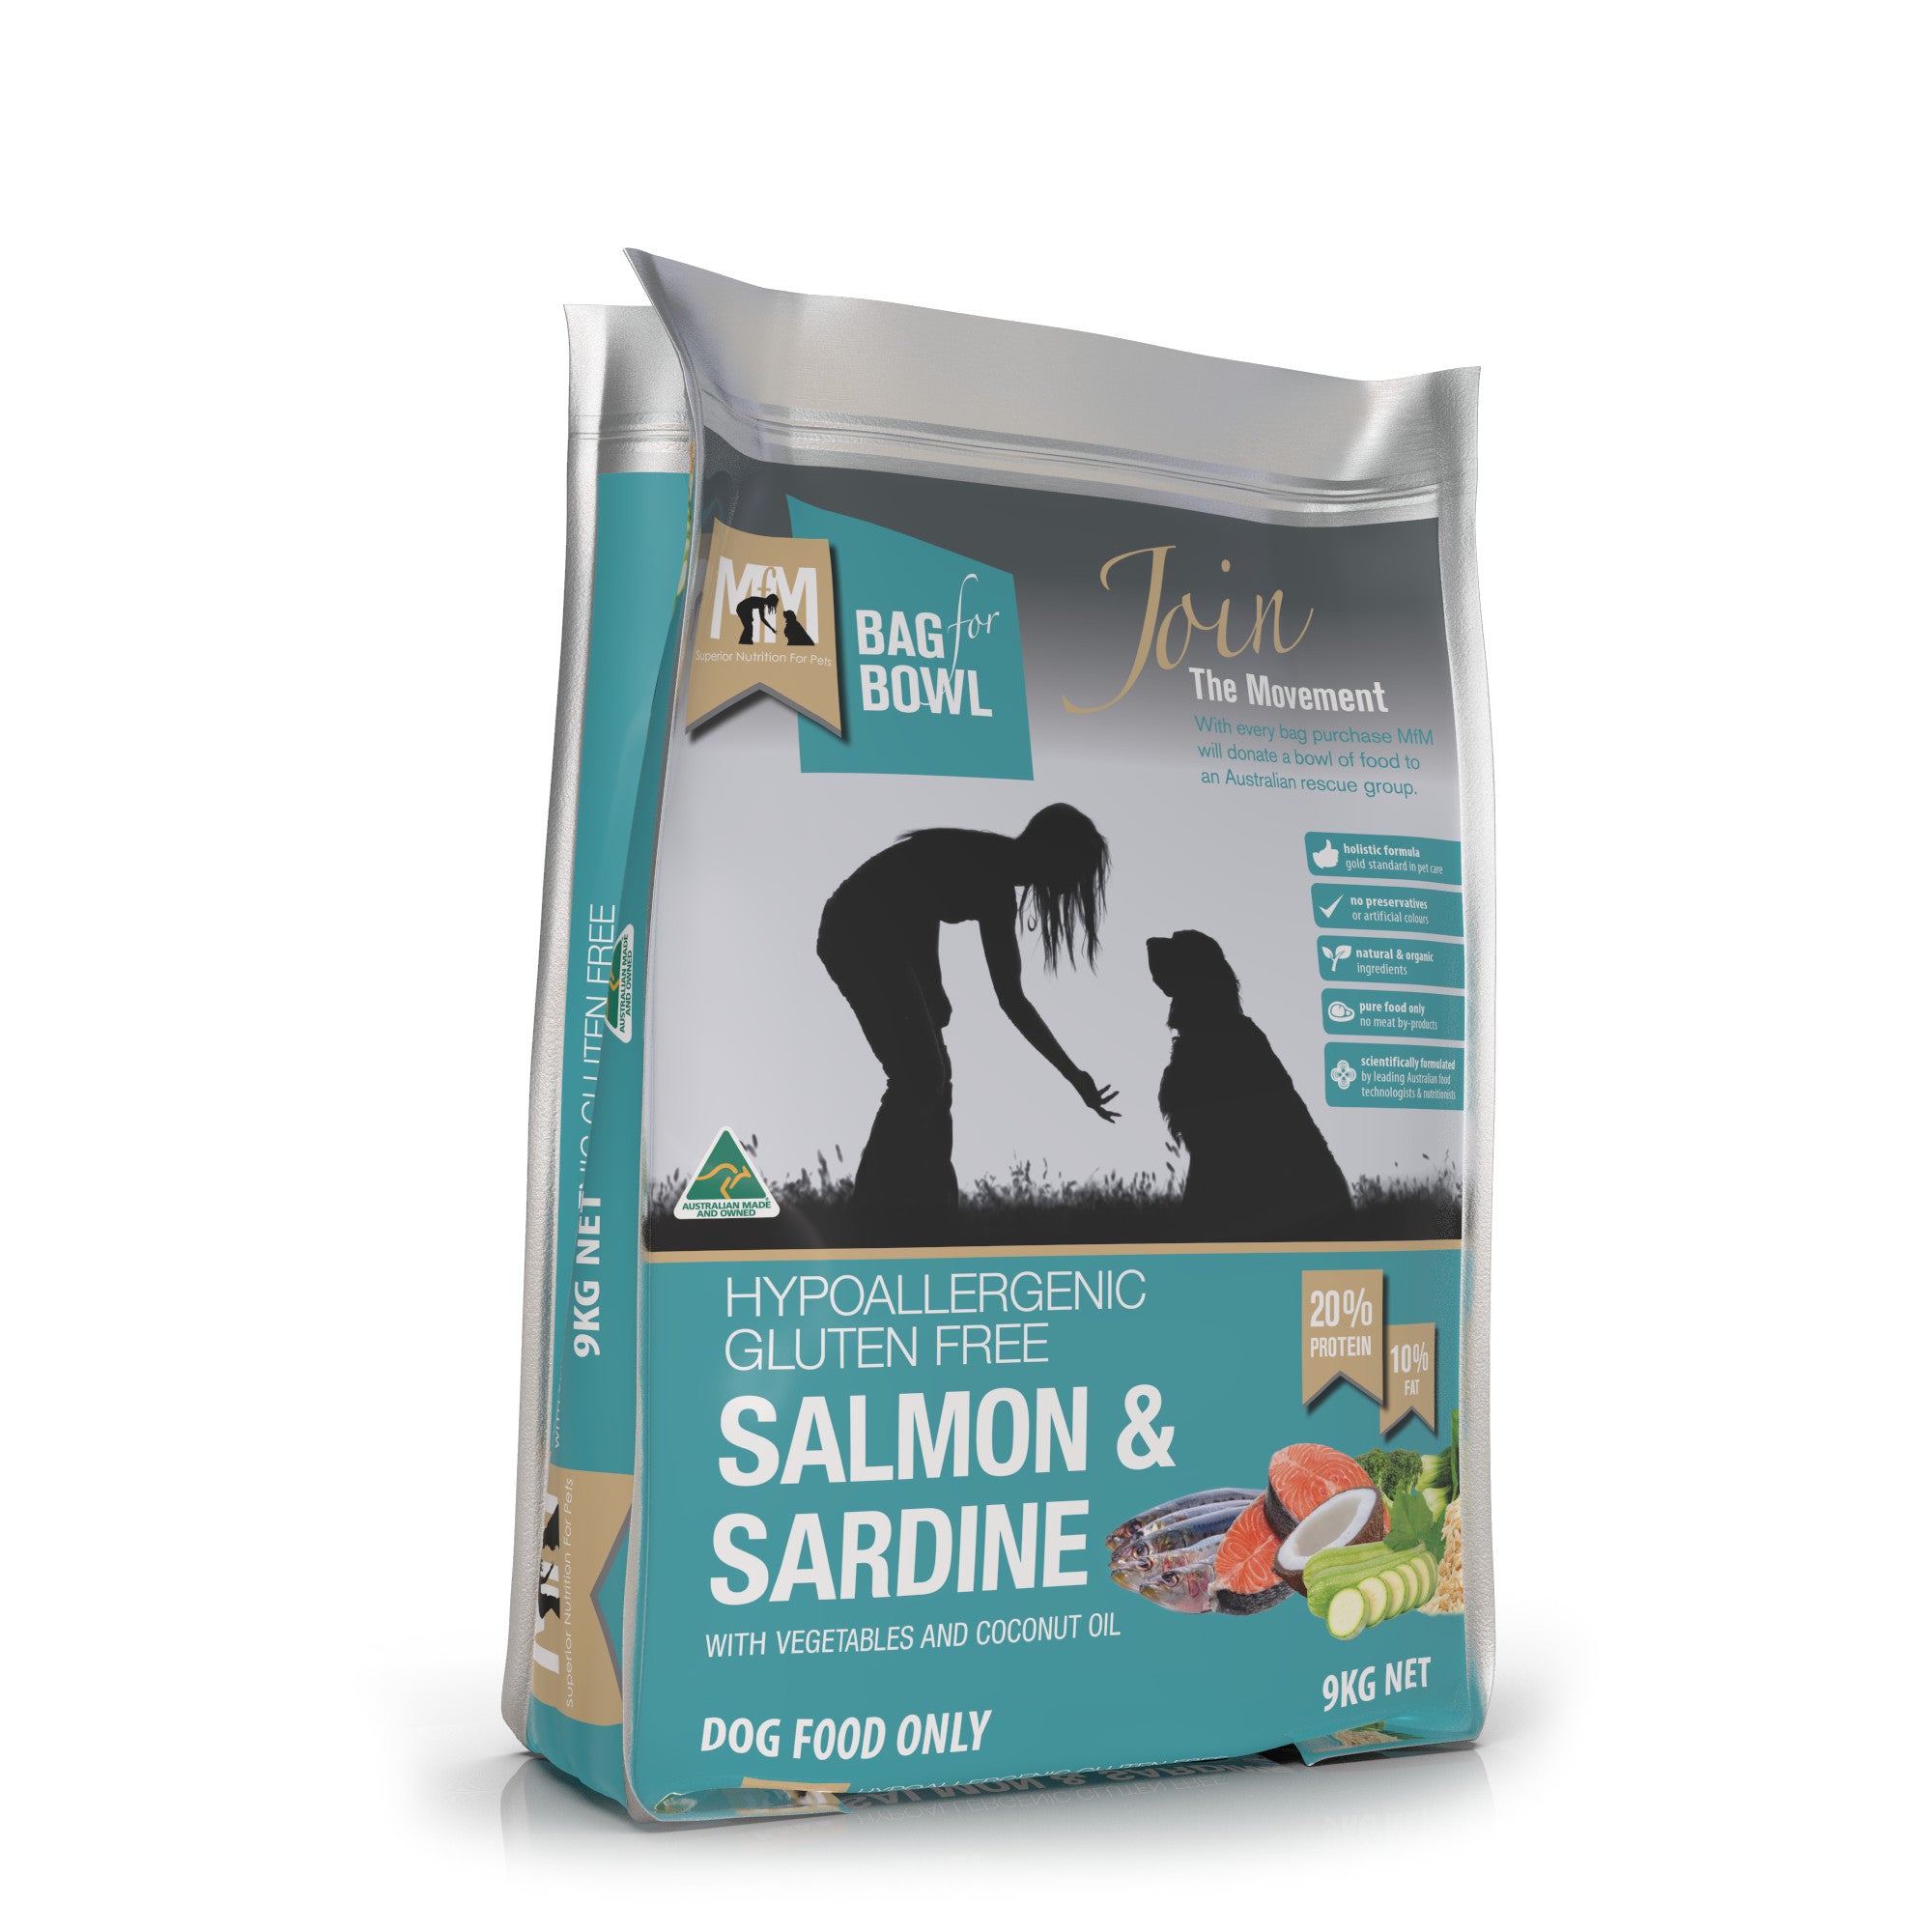 Meals for Mutts Salmon & Sardine Dog Food 9kg.